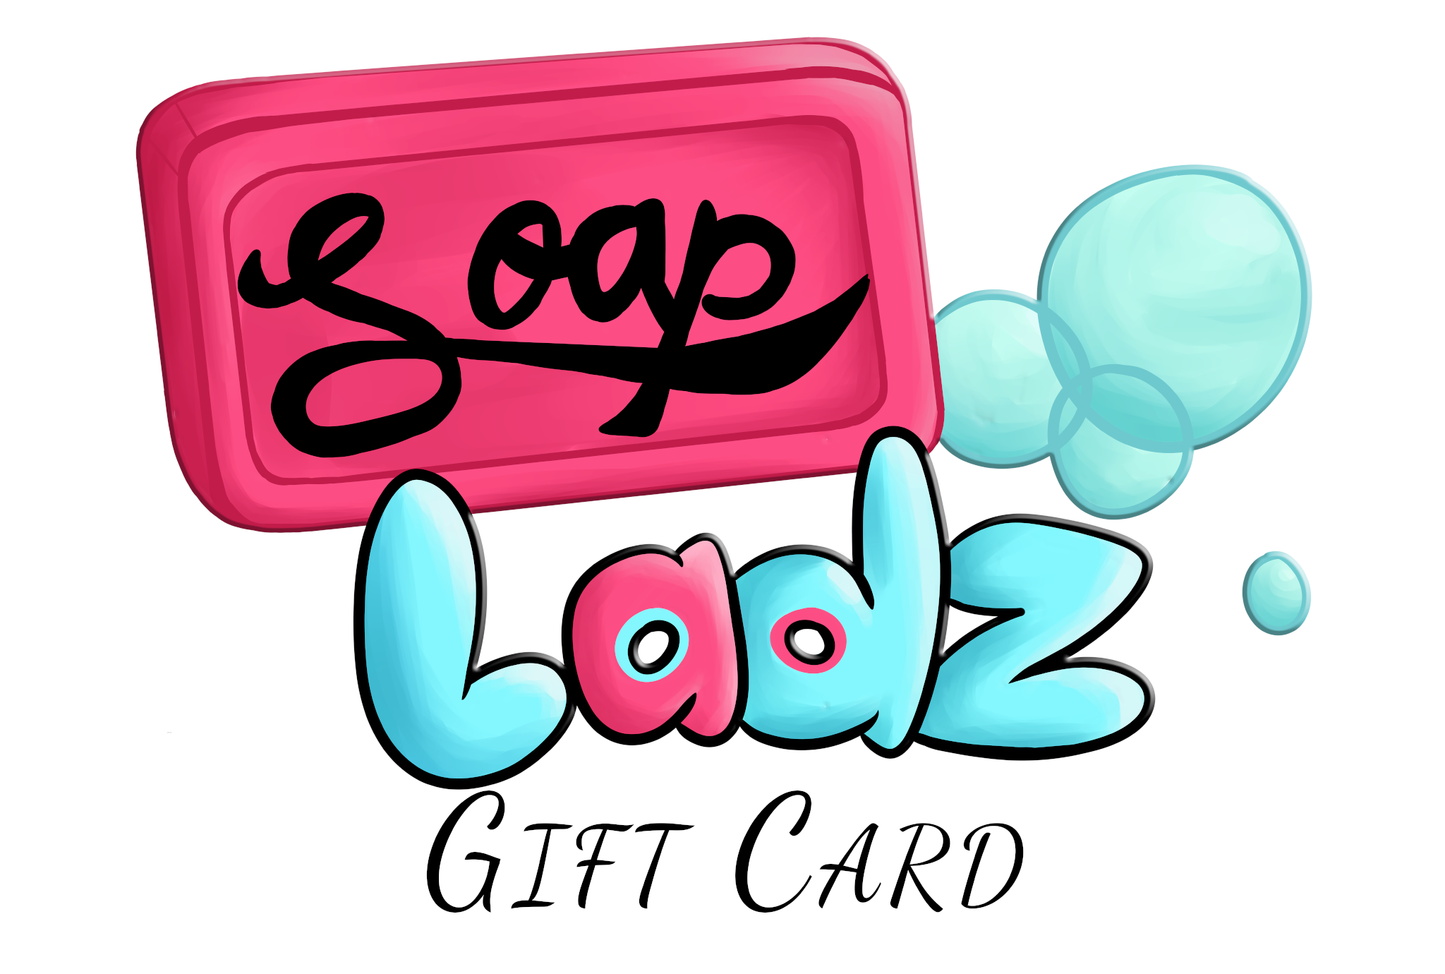 SoapLadz Gift Card